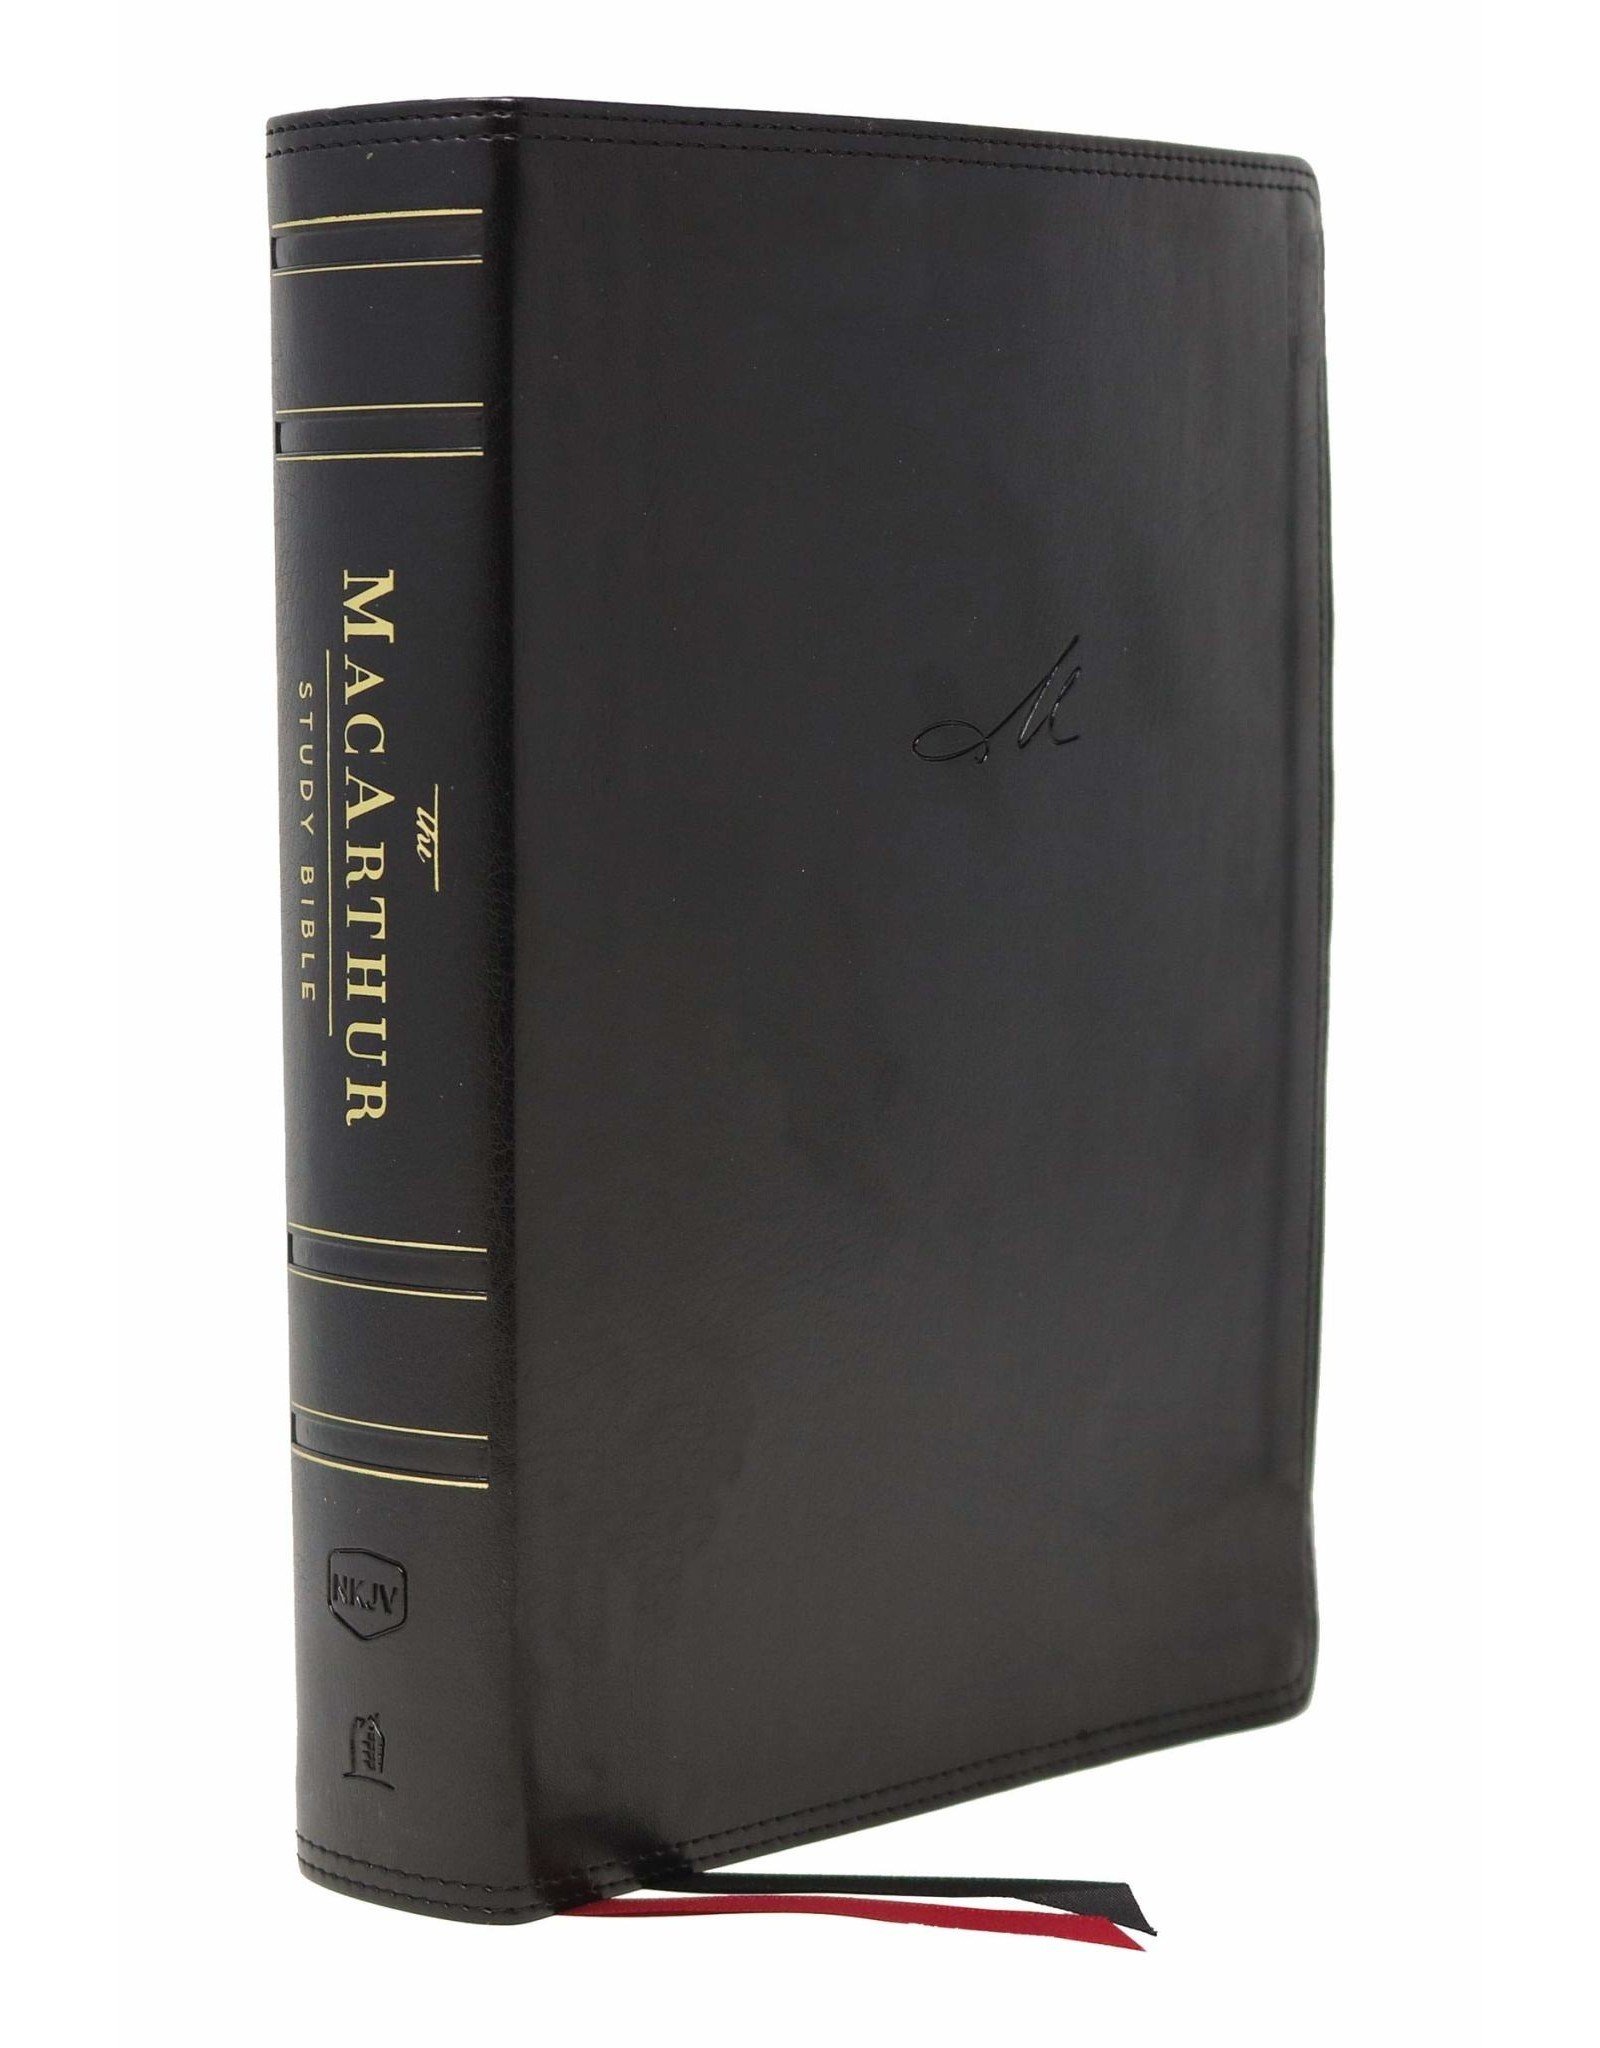 Harper Collins / Thomas Nelson / Zondervan NKJV MacArthur Study Bible, 2nd Edition, Leathersoft, Black, Comfort Print